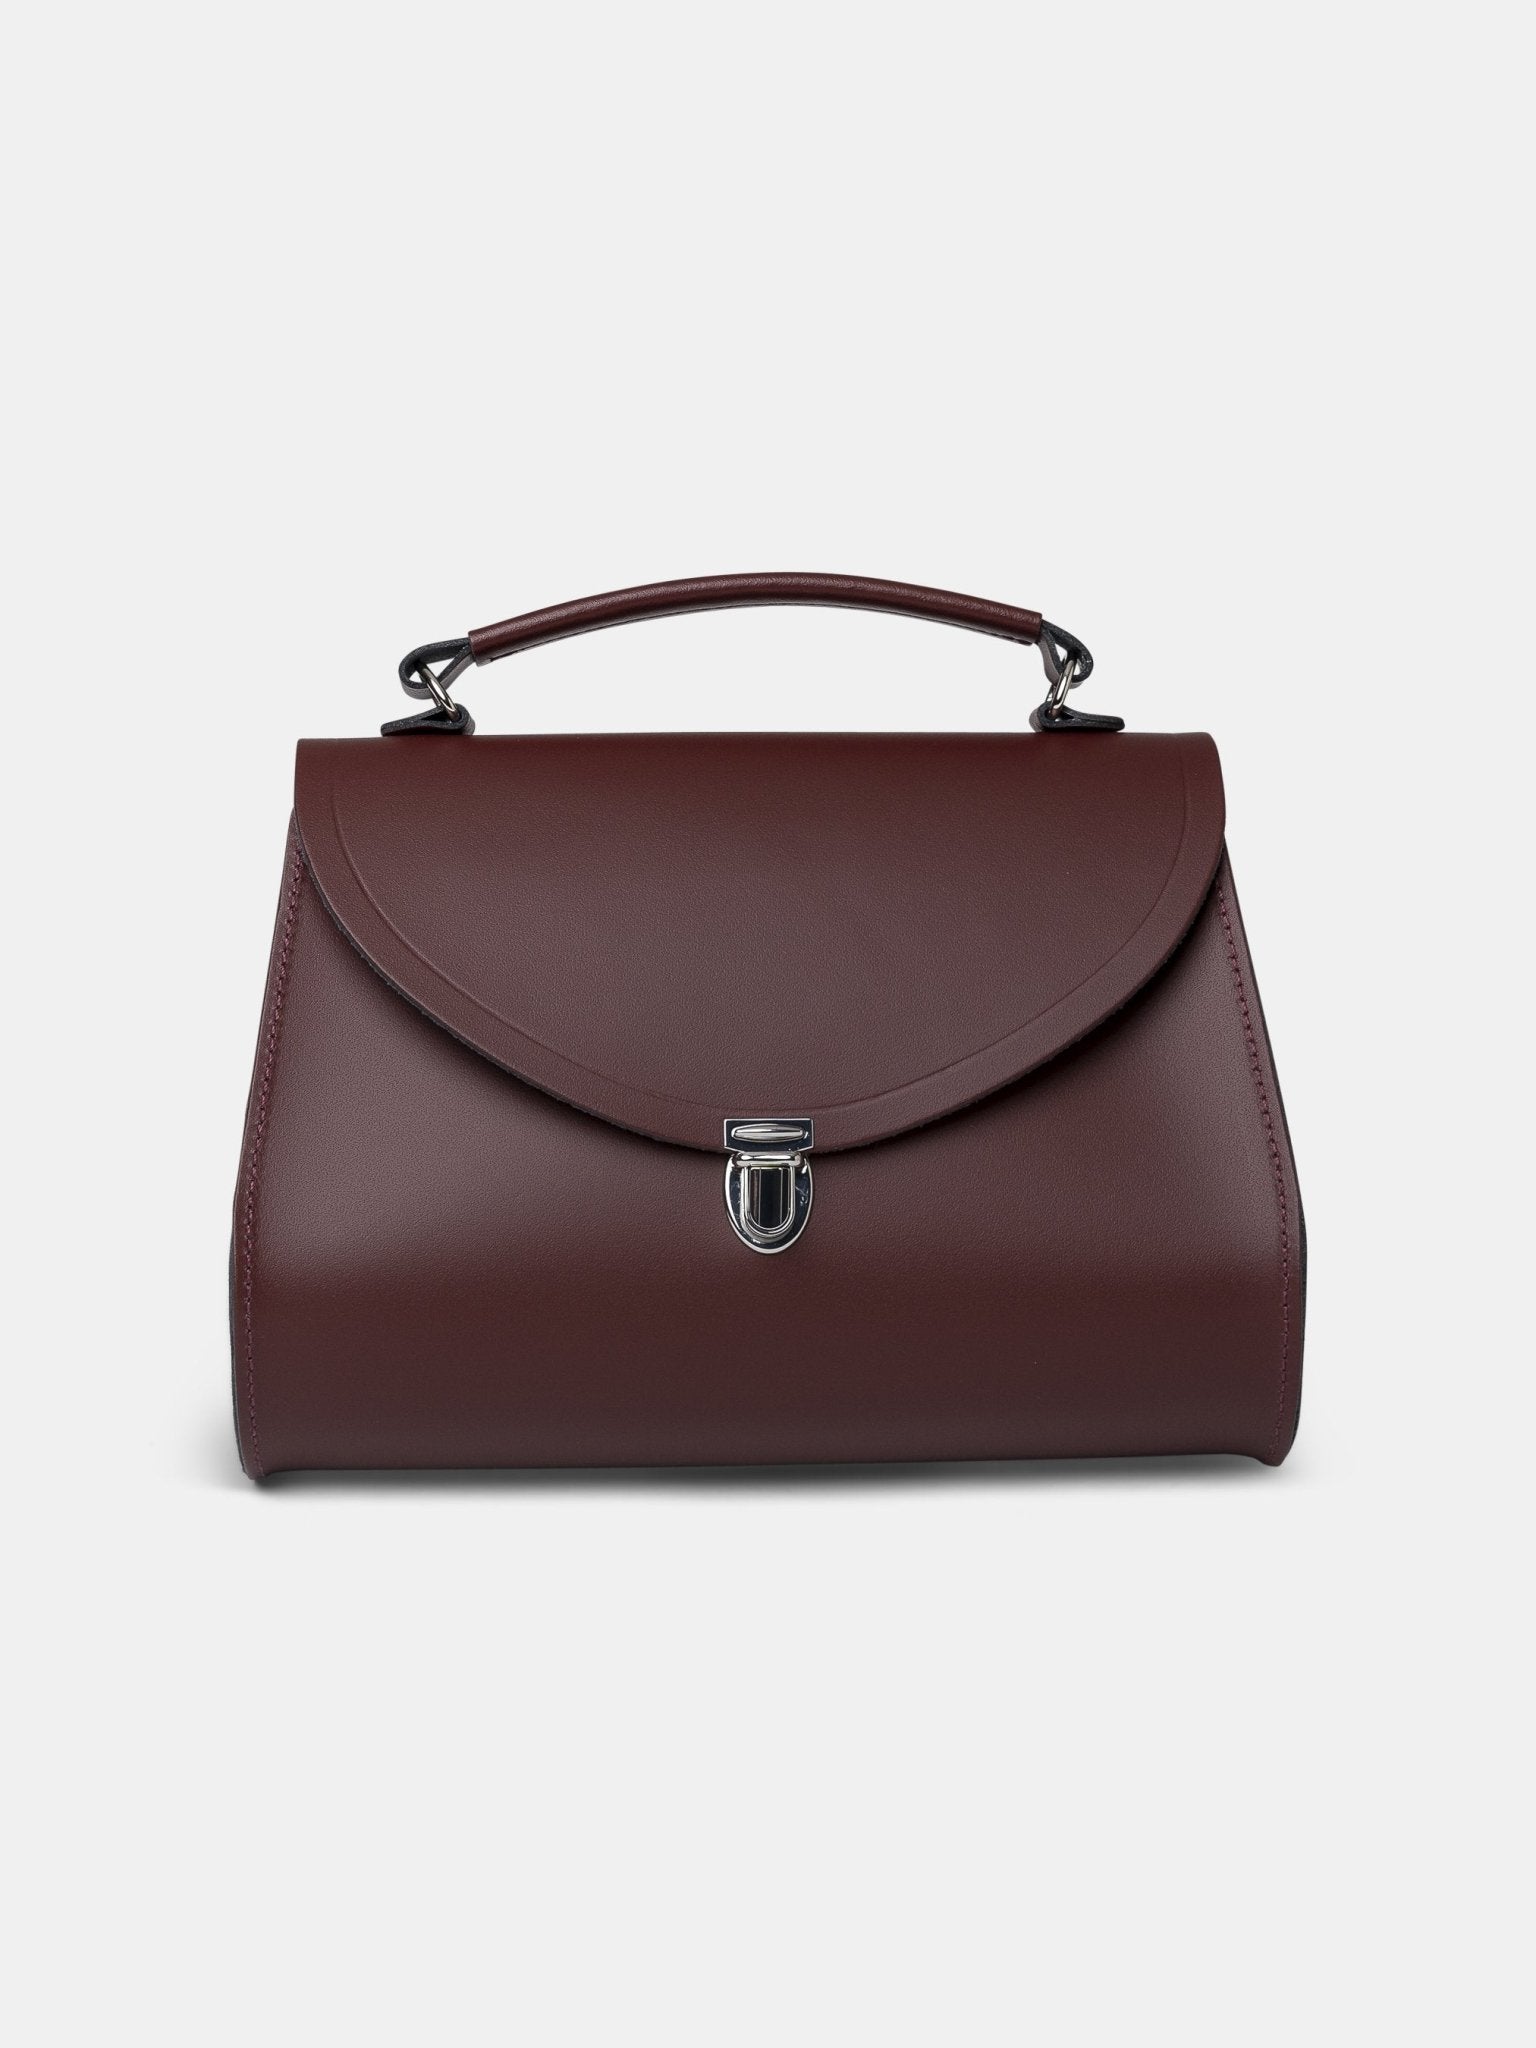 The Cambridge Satchel Co. Womens Oxblood Leather Handbag